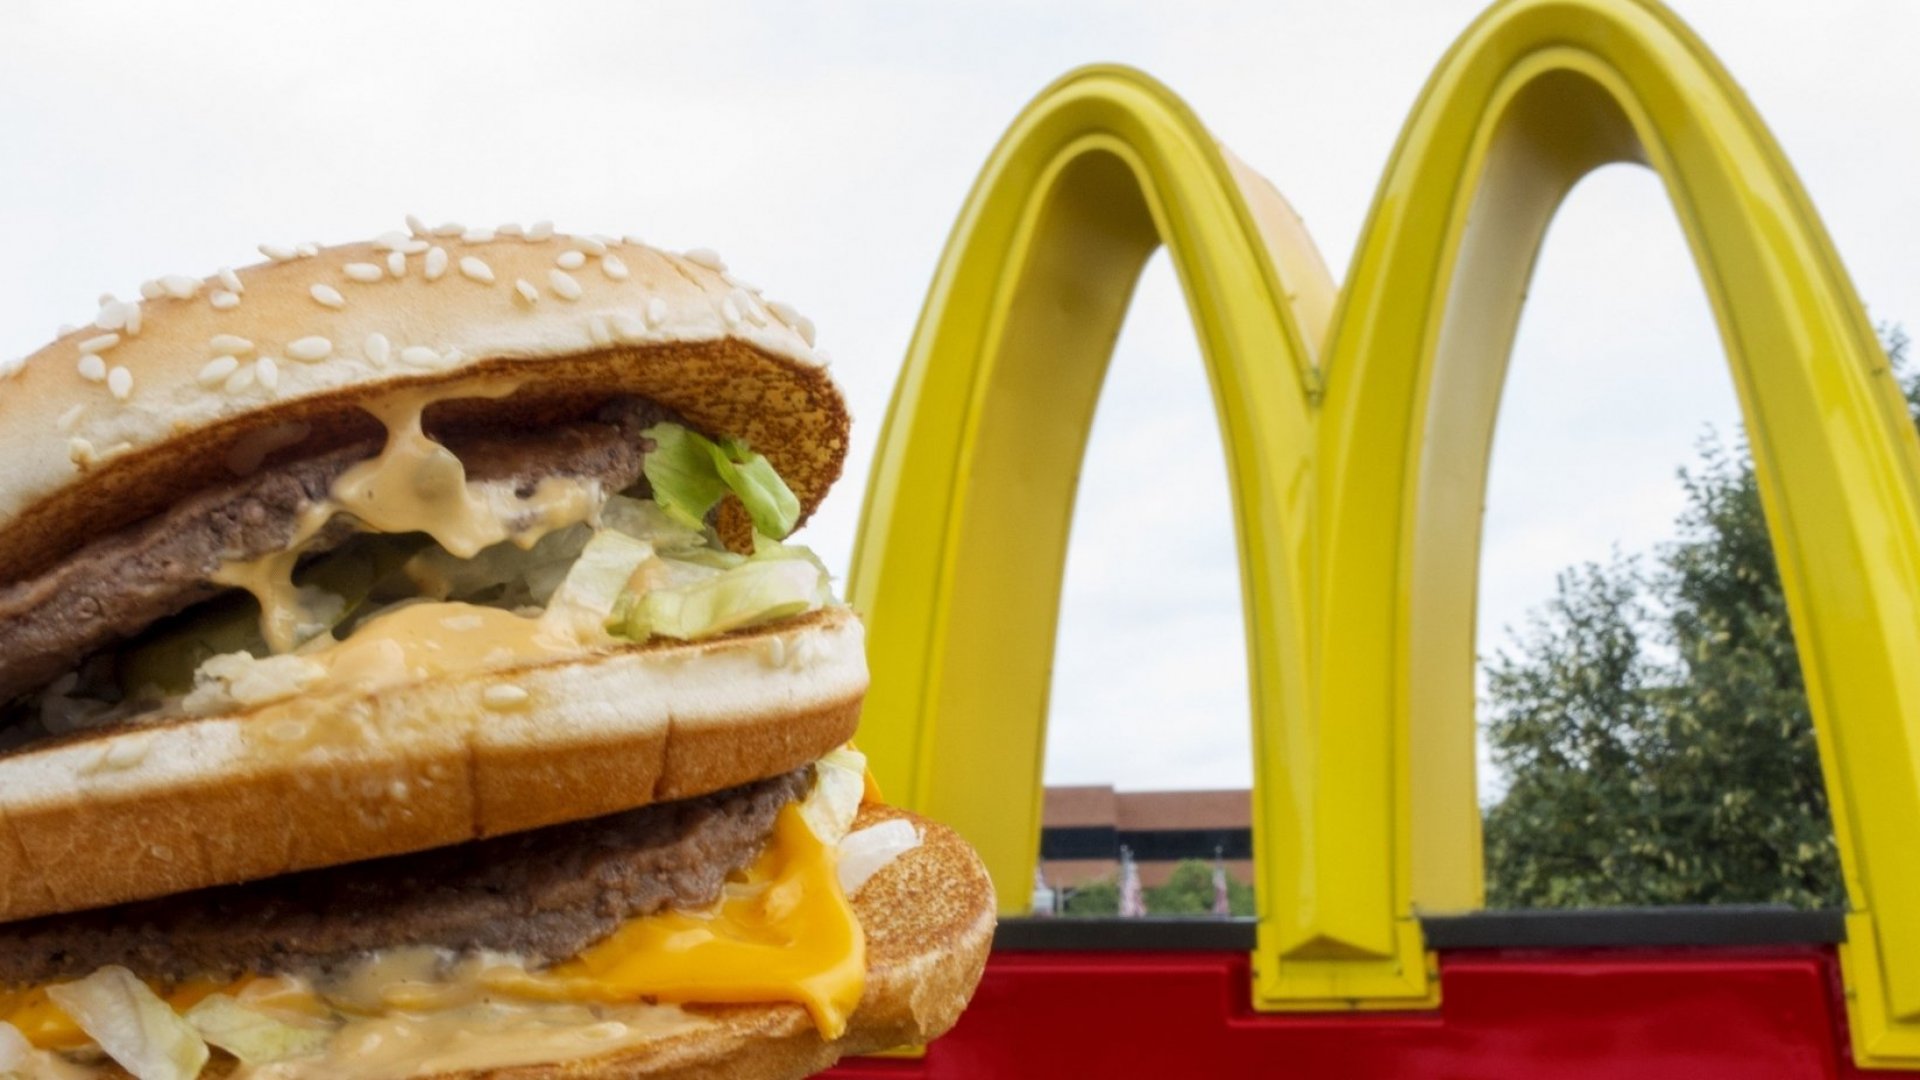 McDonald's Big Announcement. Is It Smart?